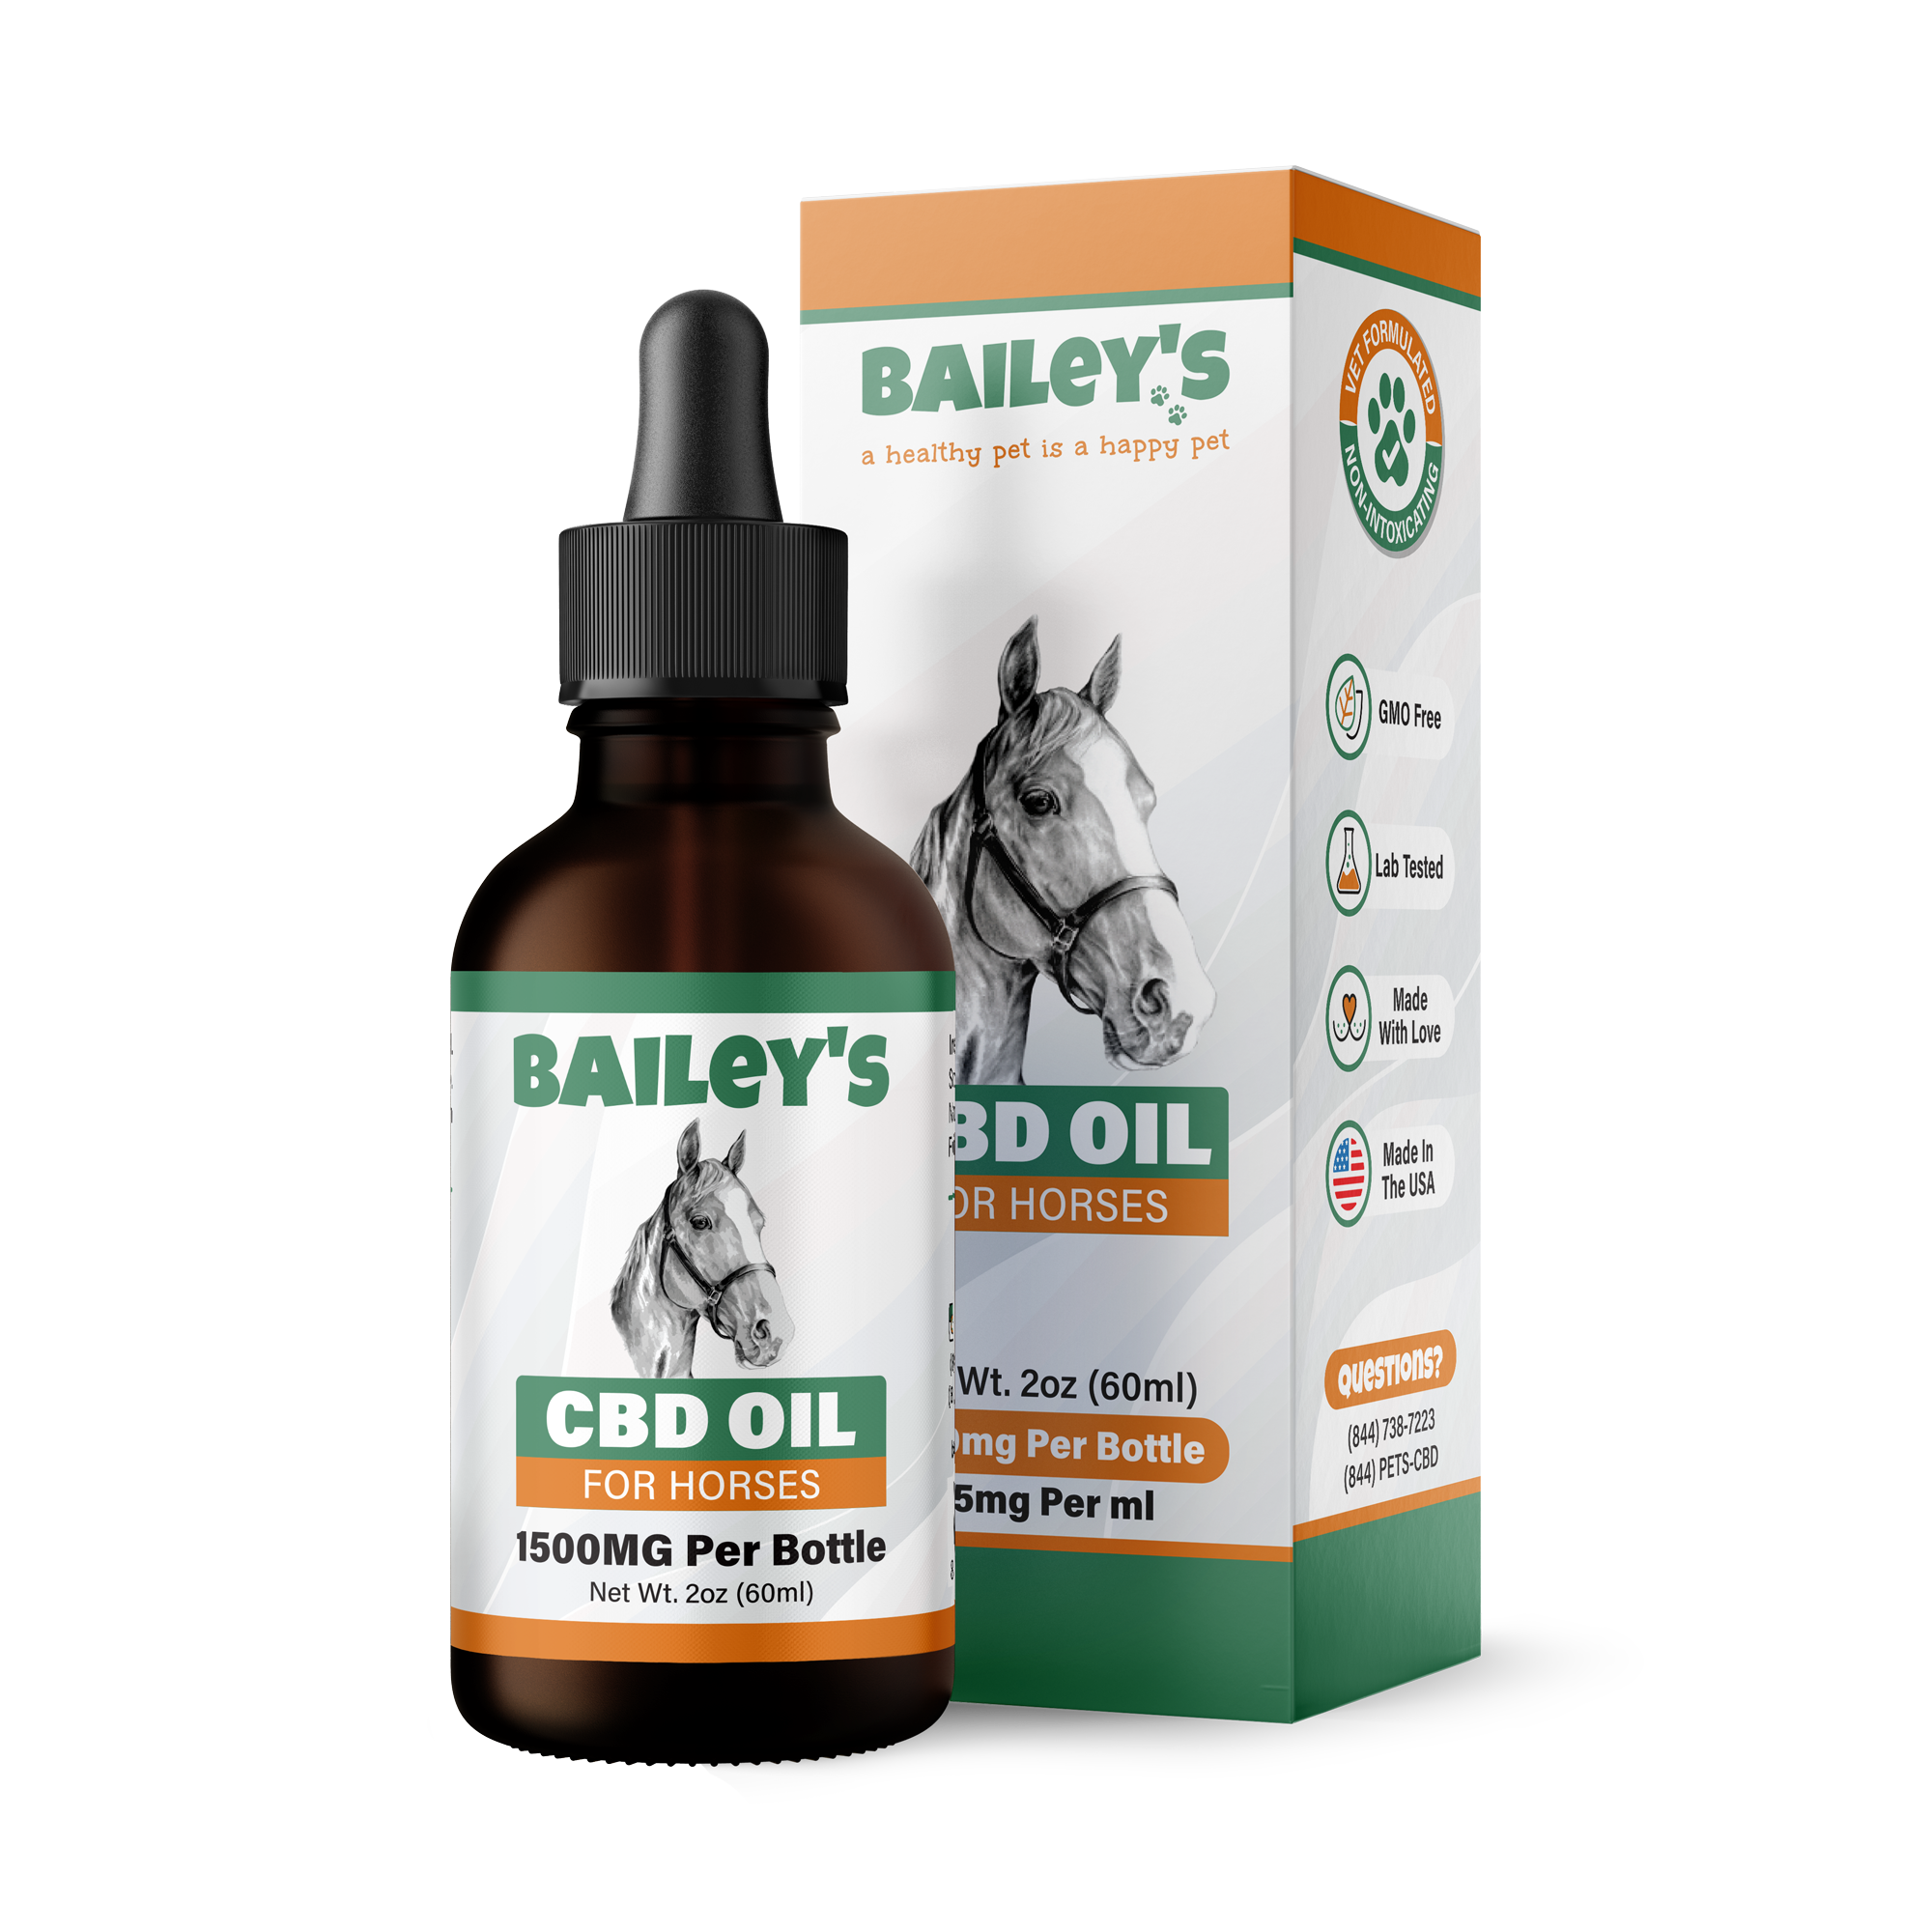 Baileys CBD Oil For Horses 1500mg